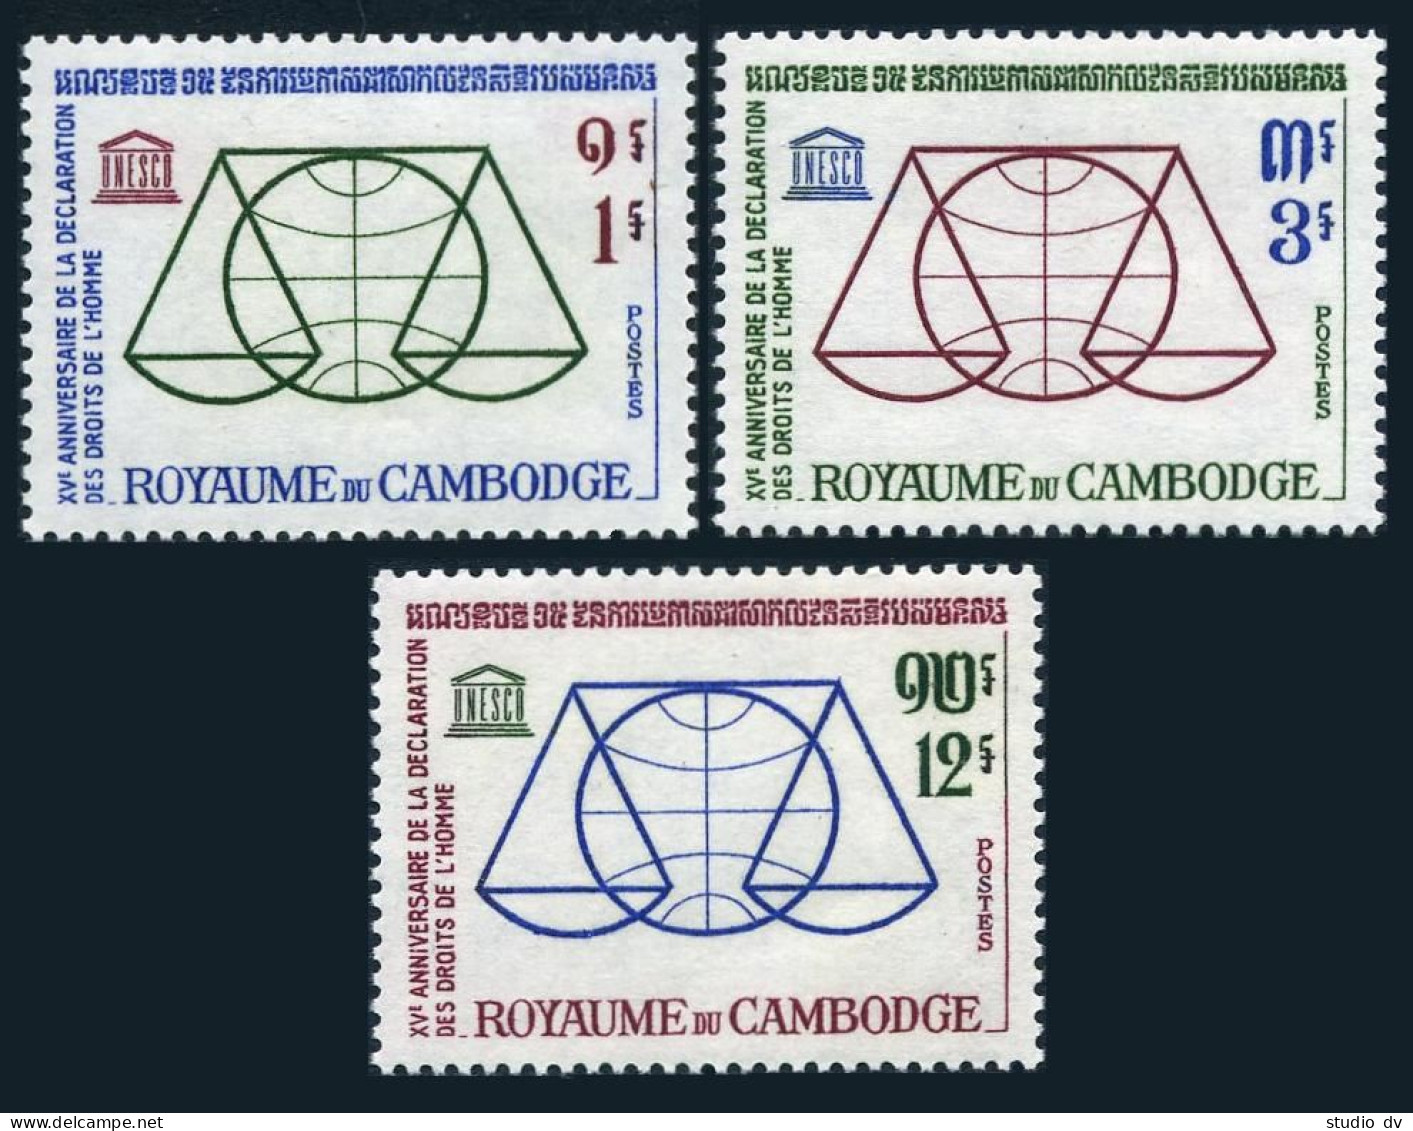 Cambodia 126-128, MNH. Mi 160-162. UNESCO-15, 1963. Declaration Of Human Rights. - Cambodia